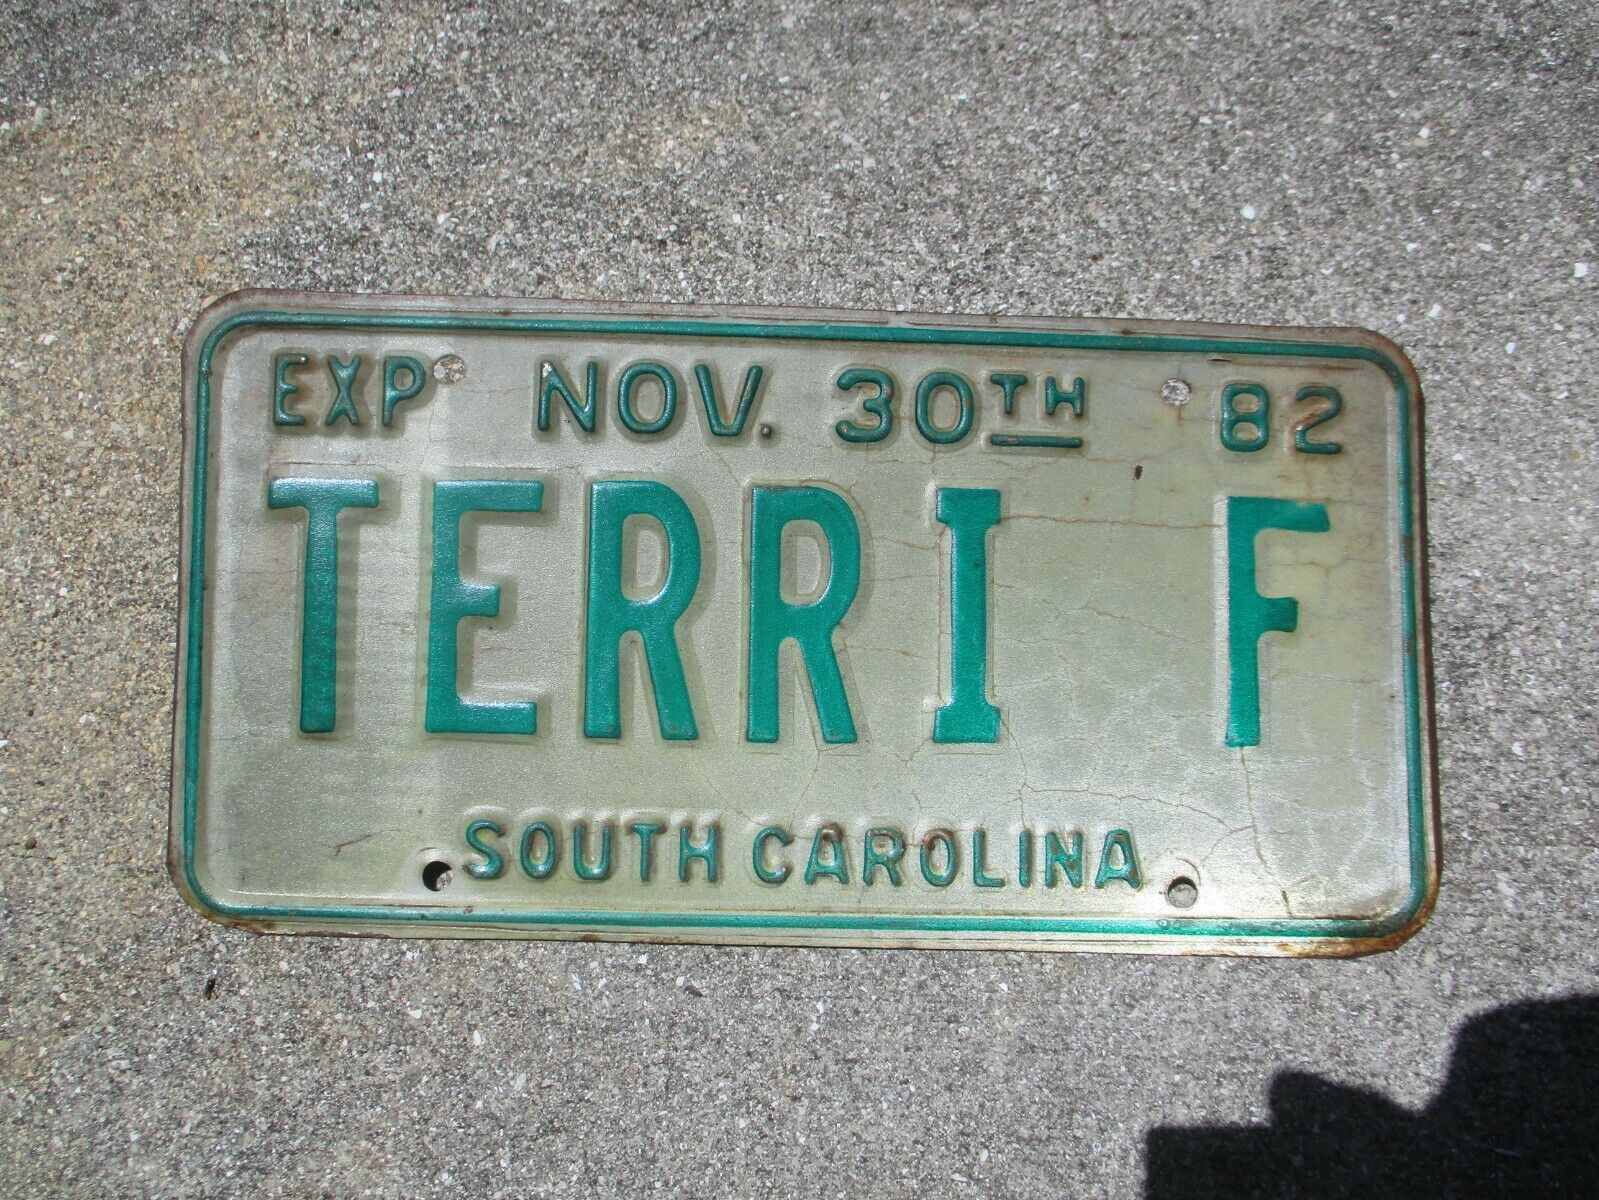 South Carolina 1982  license plate #  TERRI  F